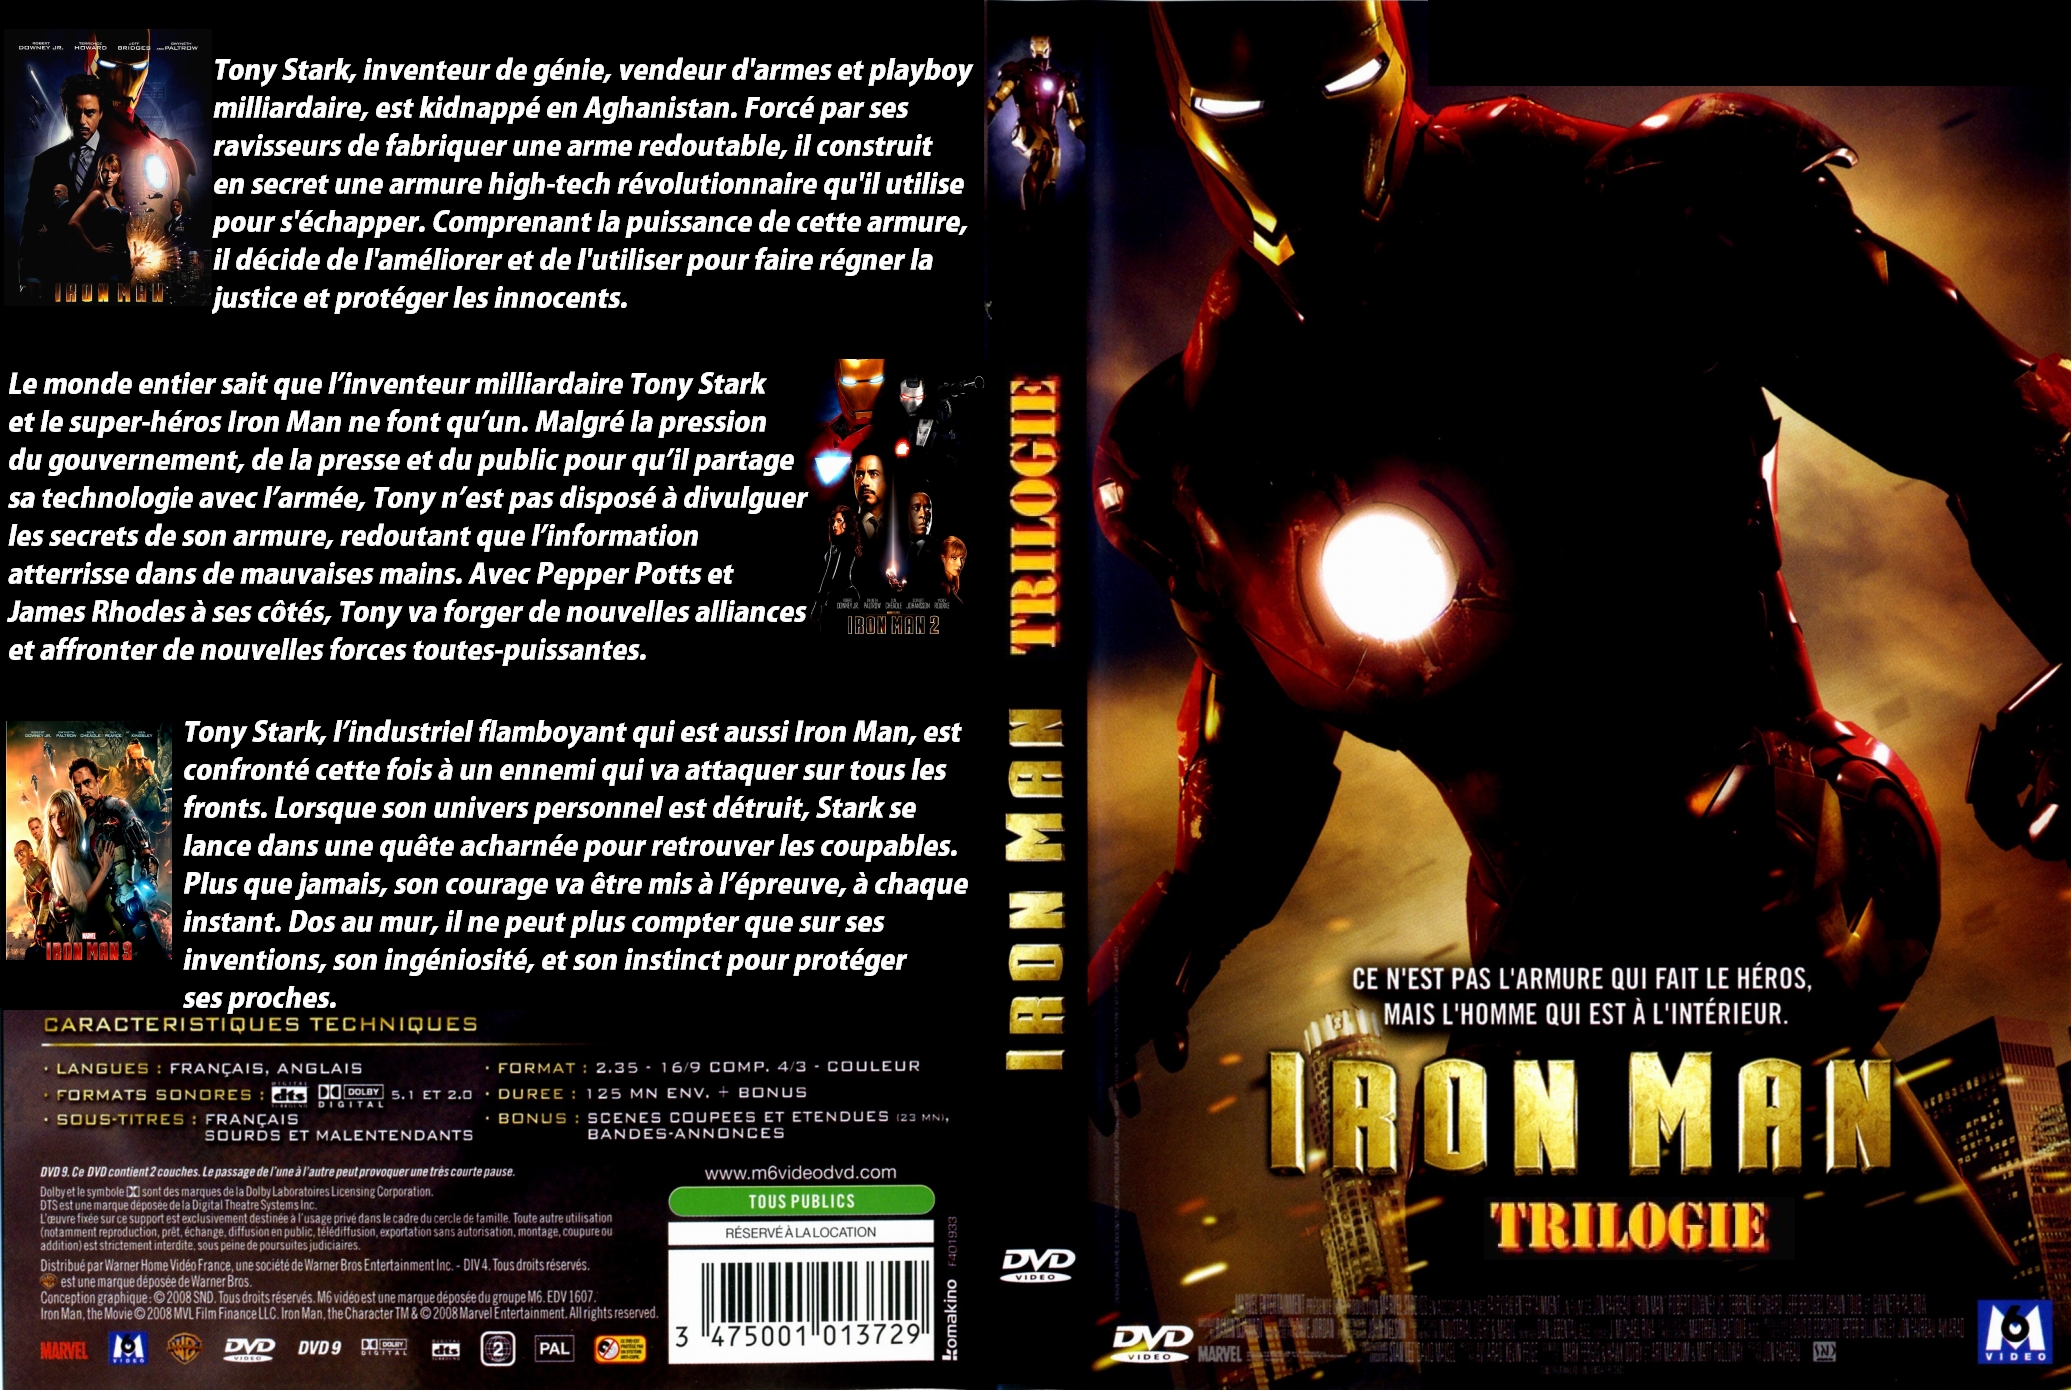 Jaquette DVD Iron Man Trilogie custom